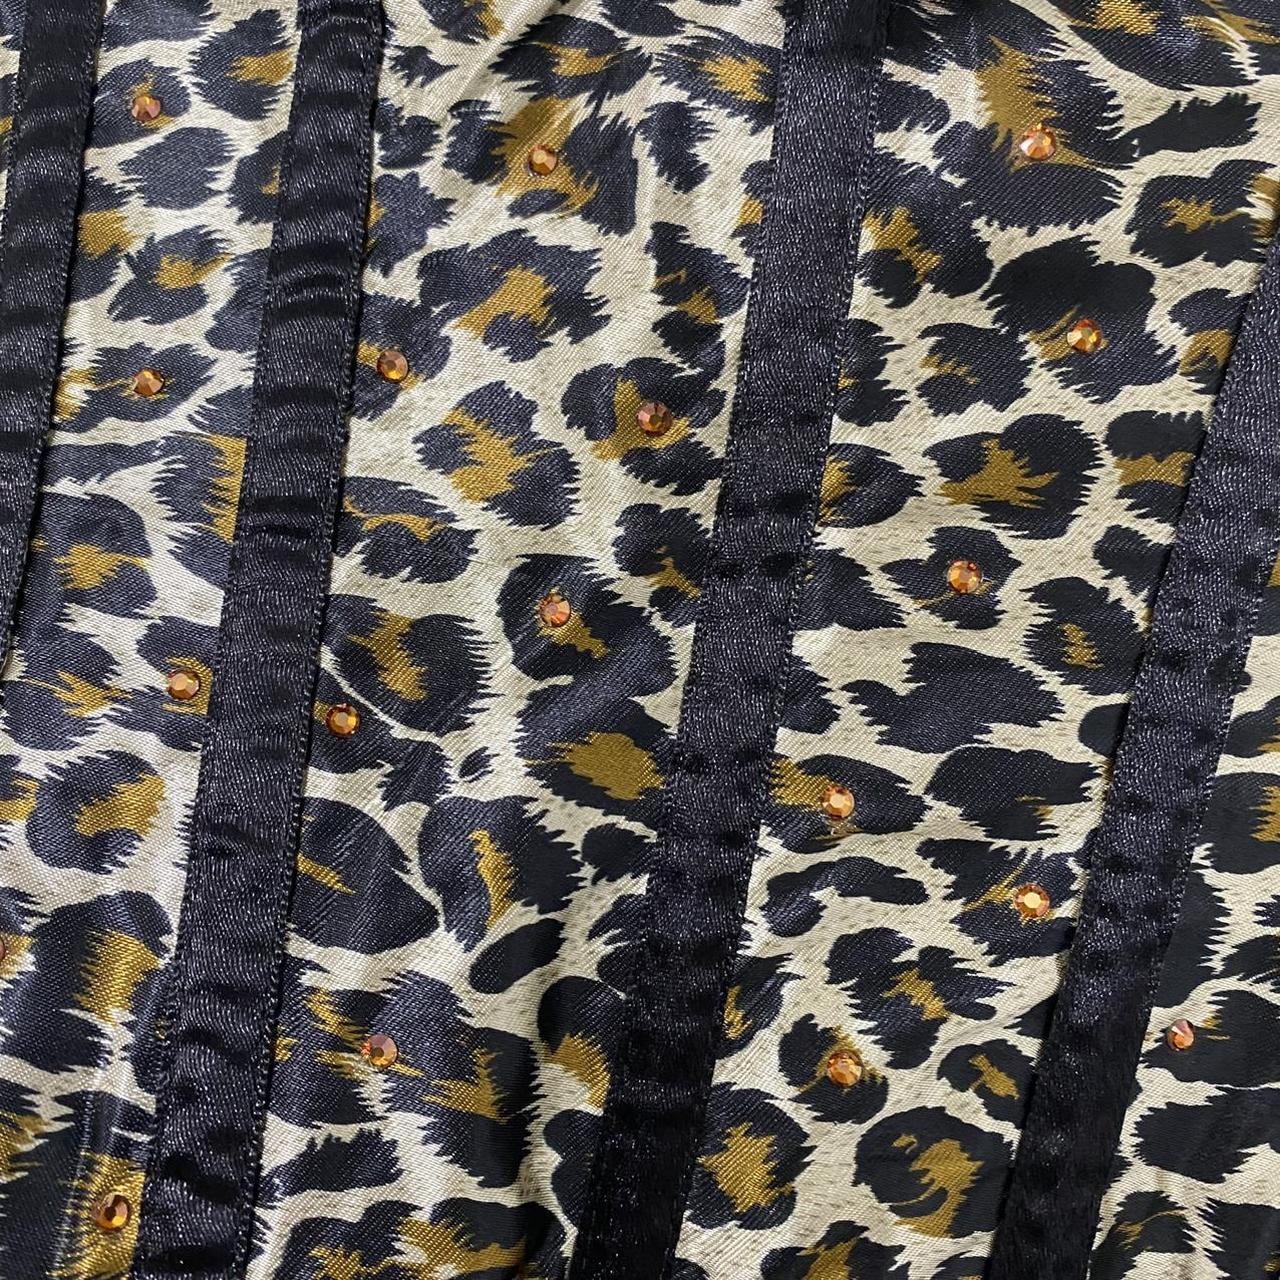 Product Image 4 - ❗️READ BIO❗️

Super cute leopard print